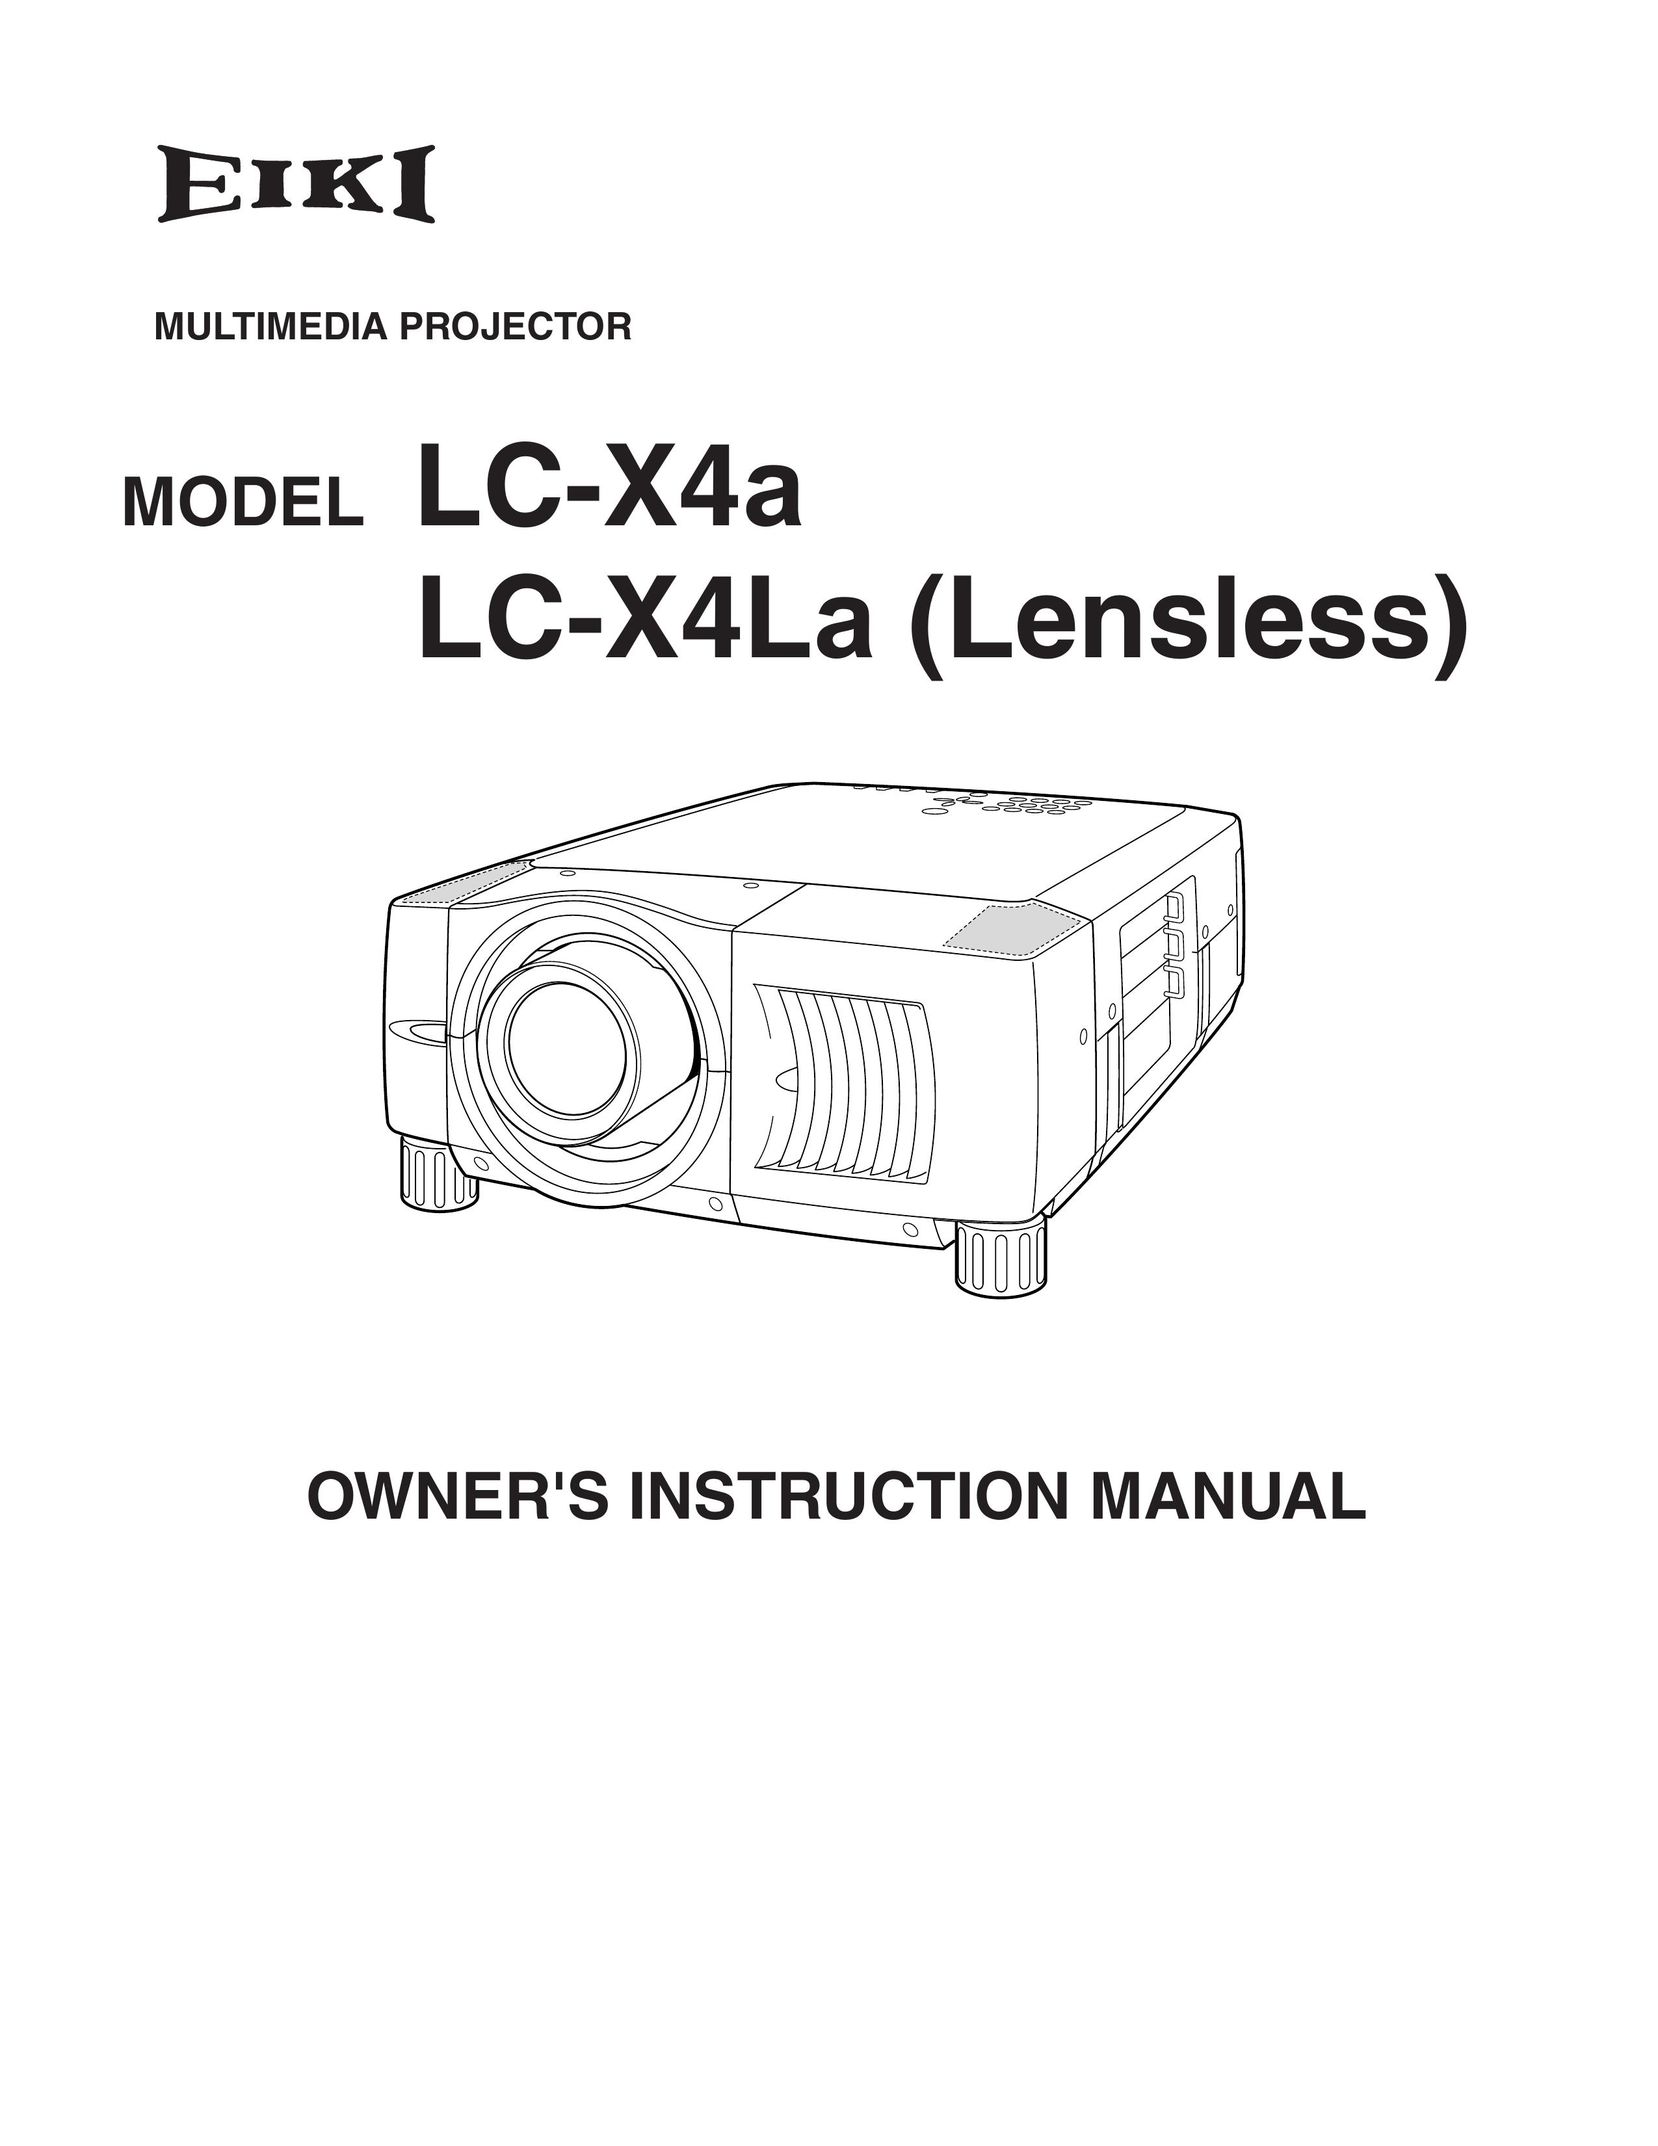 Eiki LC-X4A CRT Television User Manual